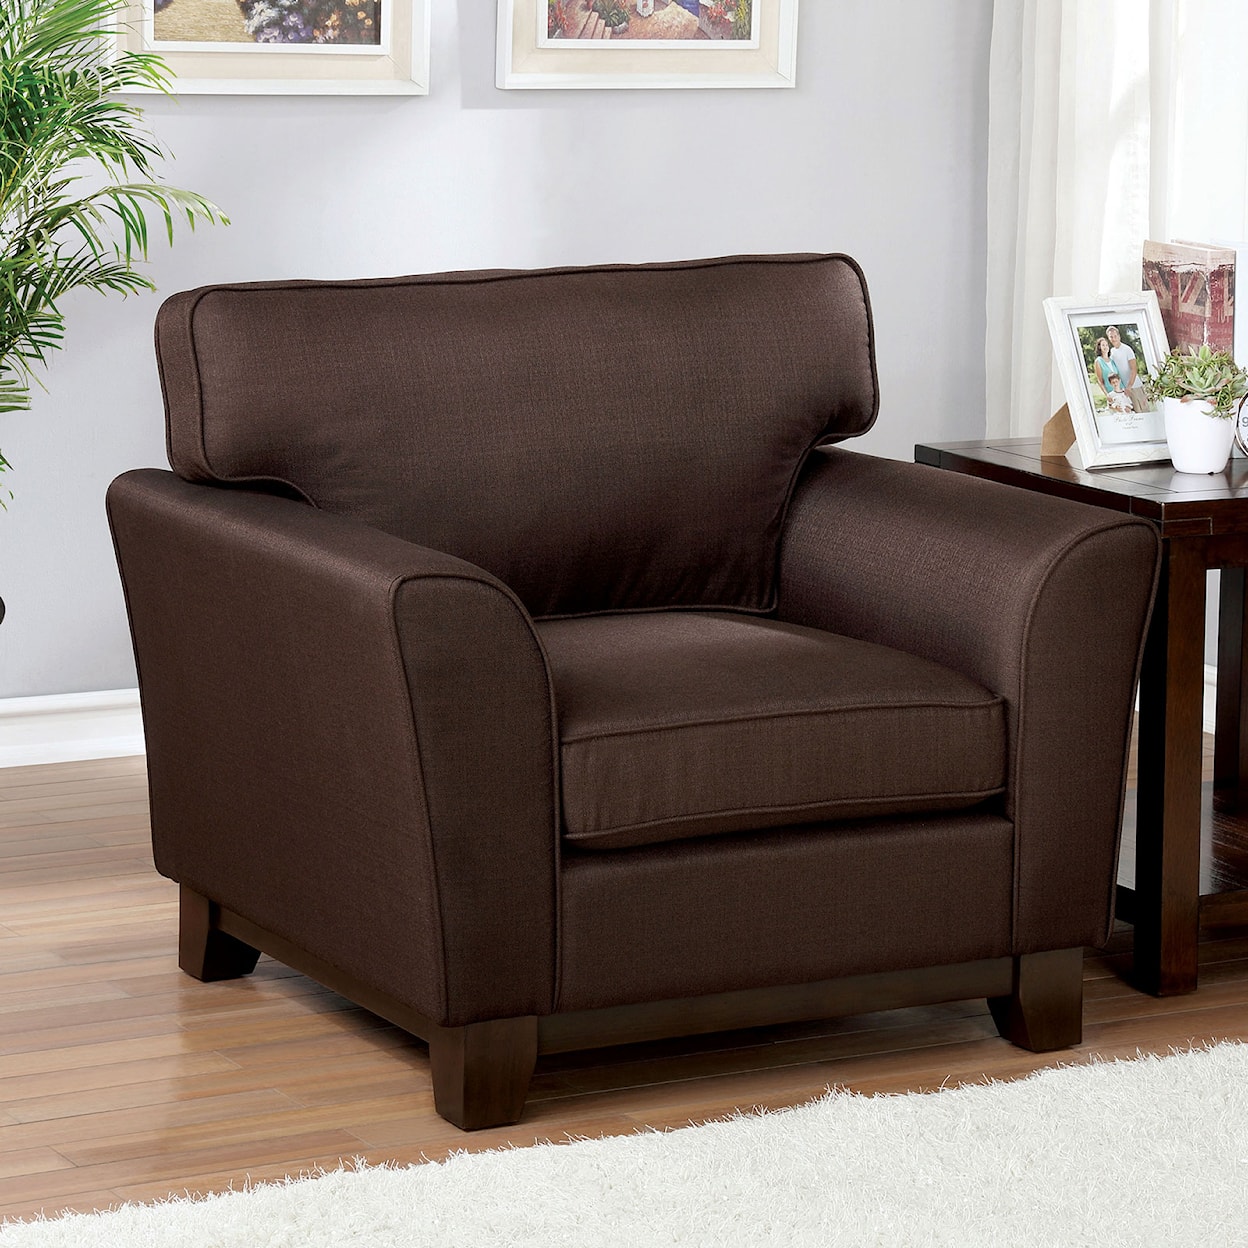 Furniture of America Caldicot Chair